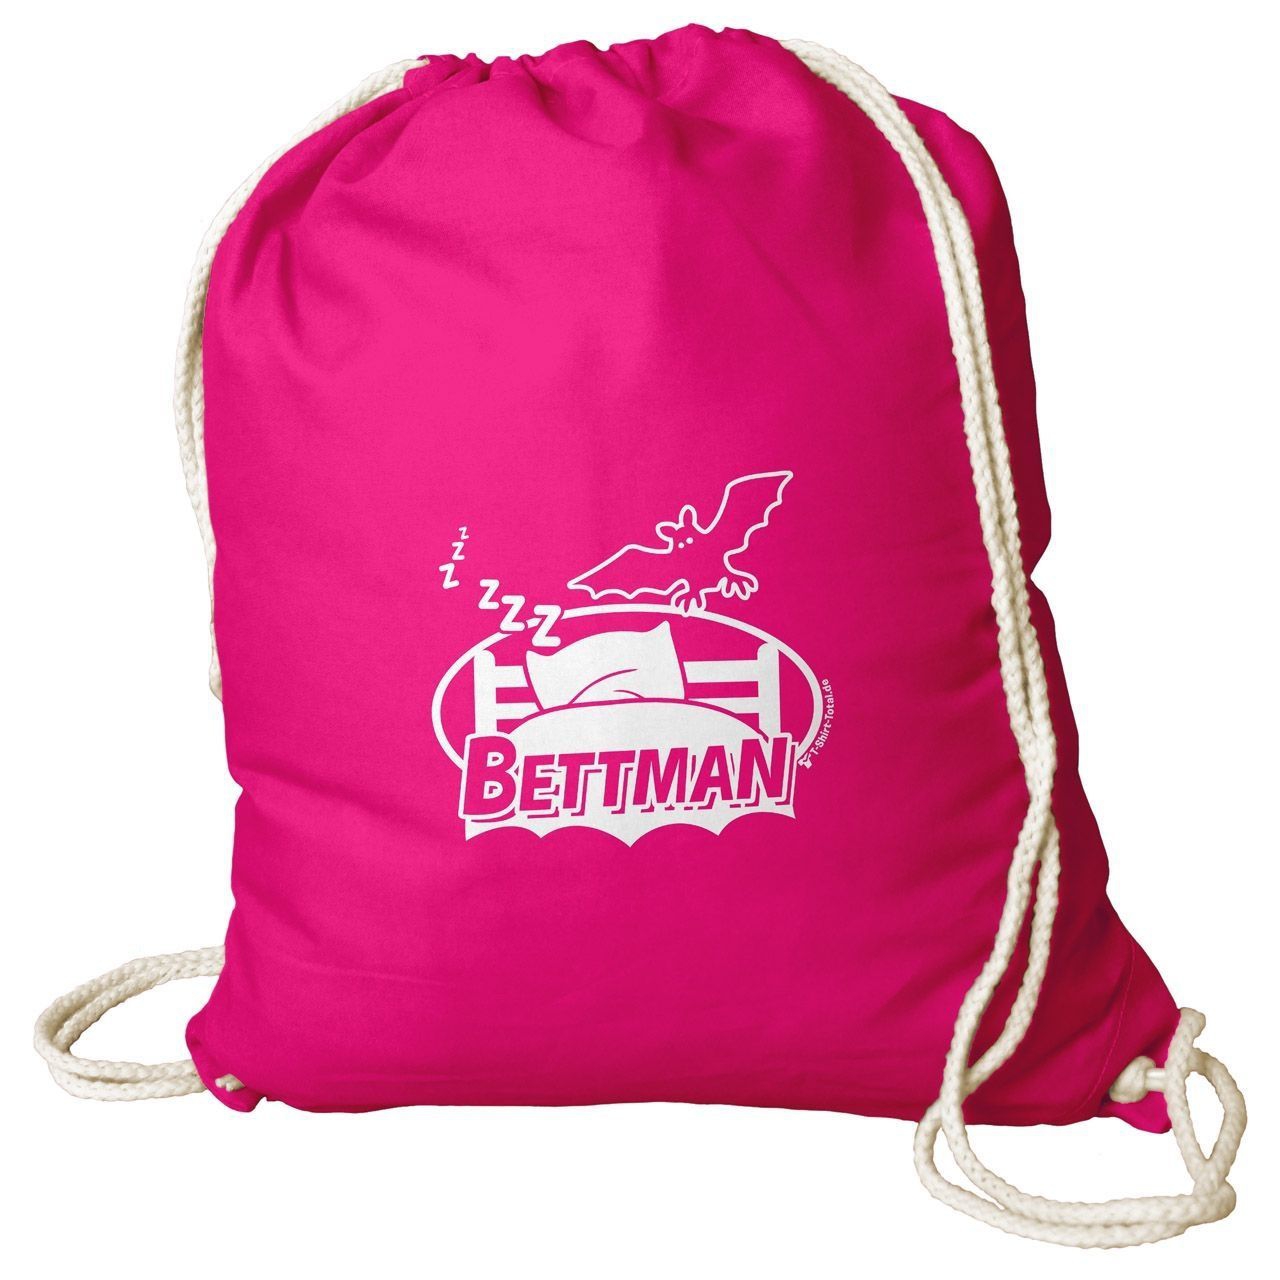 Bettman Rucksack Beutel pink